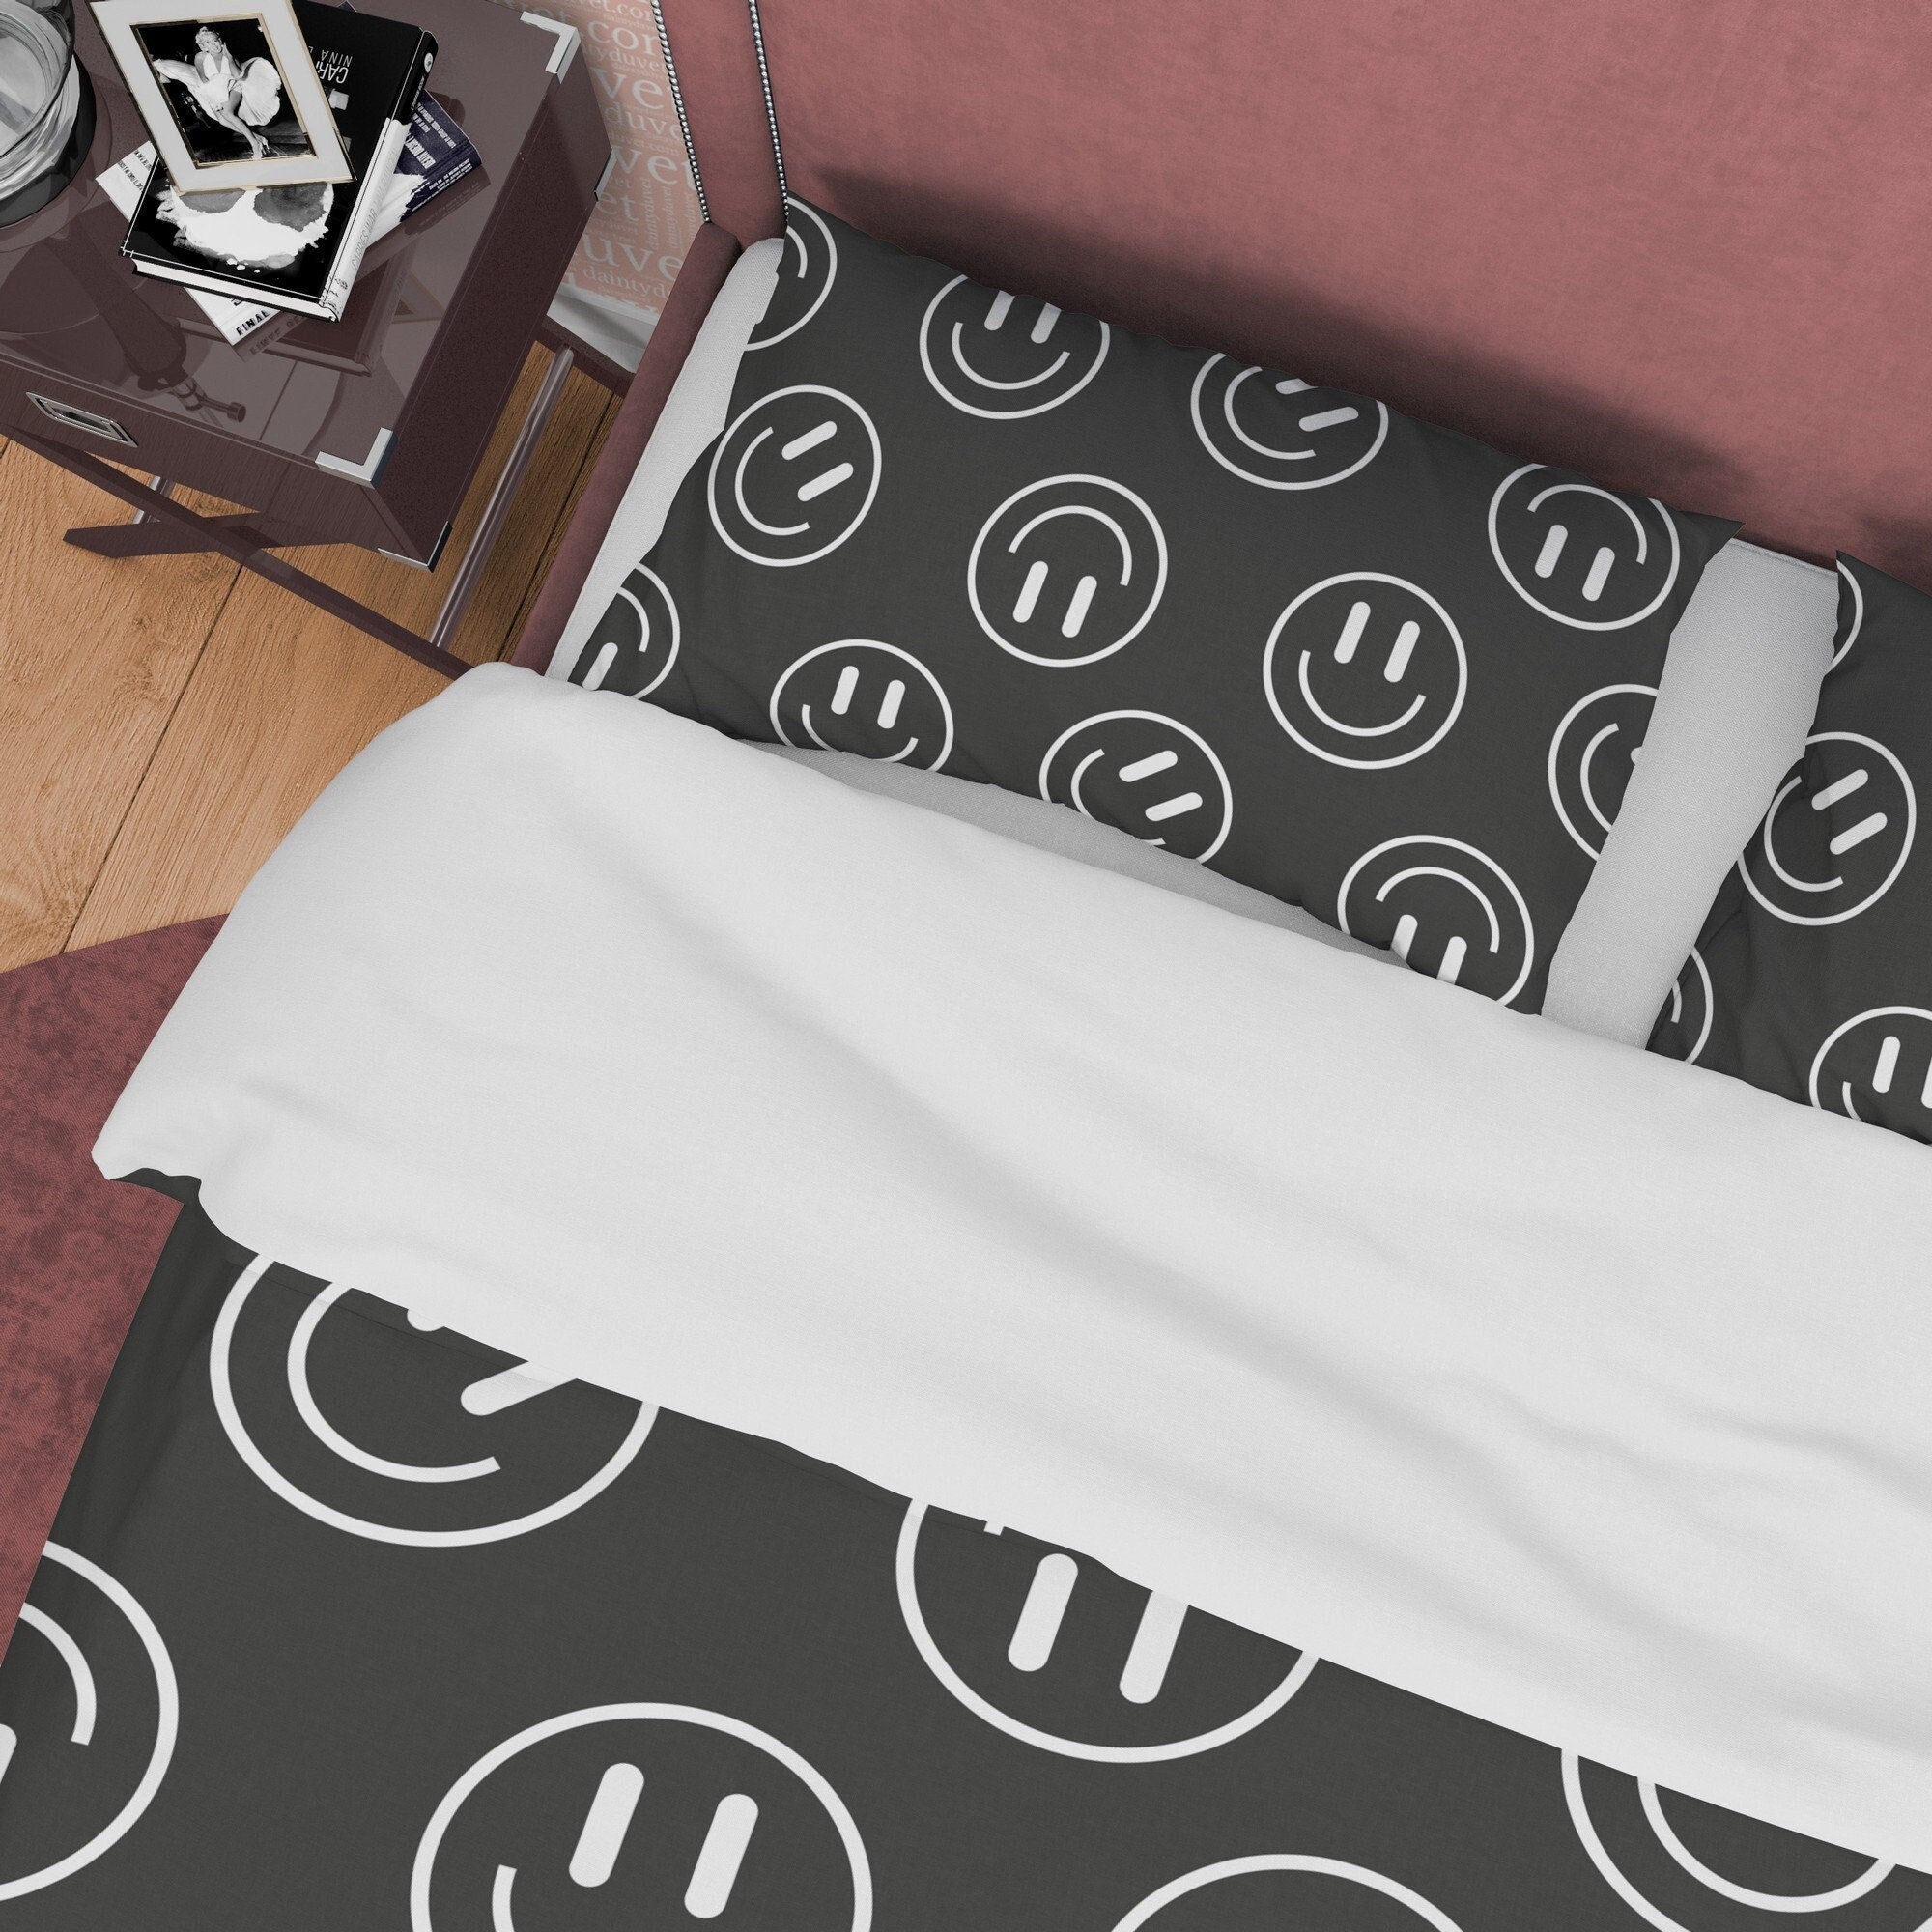 Emoji Black and White Duvet Cover Set, Happy Face Blanket Cover Retro Printed Bedding Set, 90s Nostalgia Quilt Cover, Groovy Bedspread